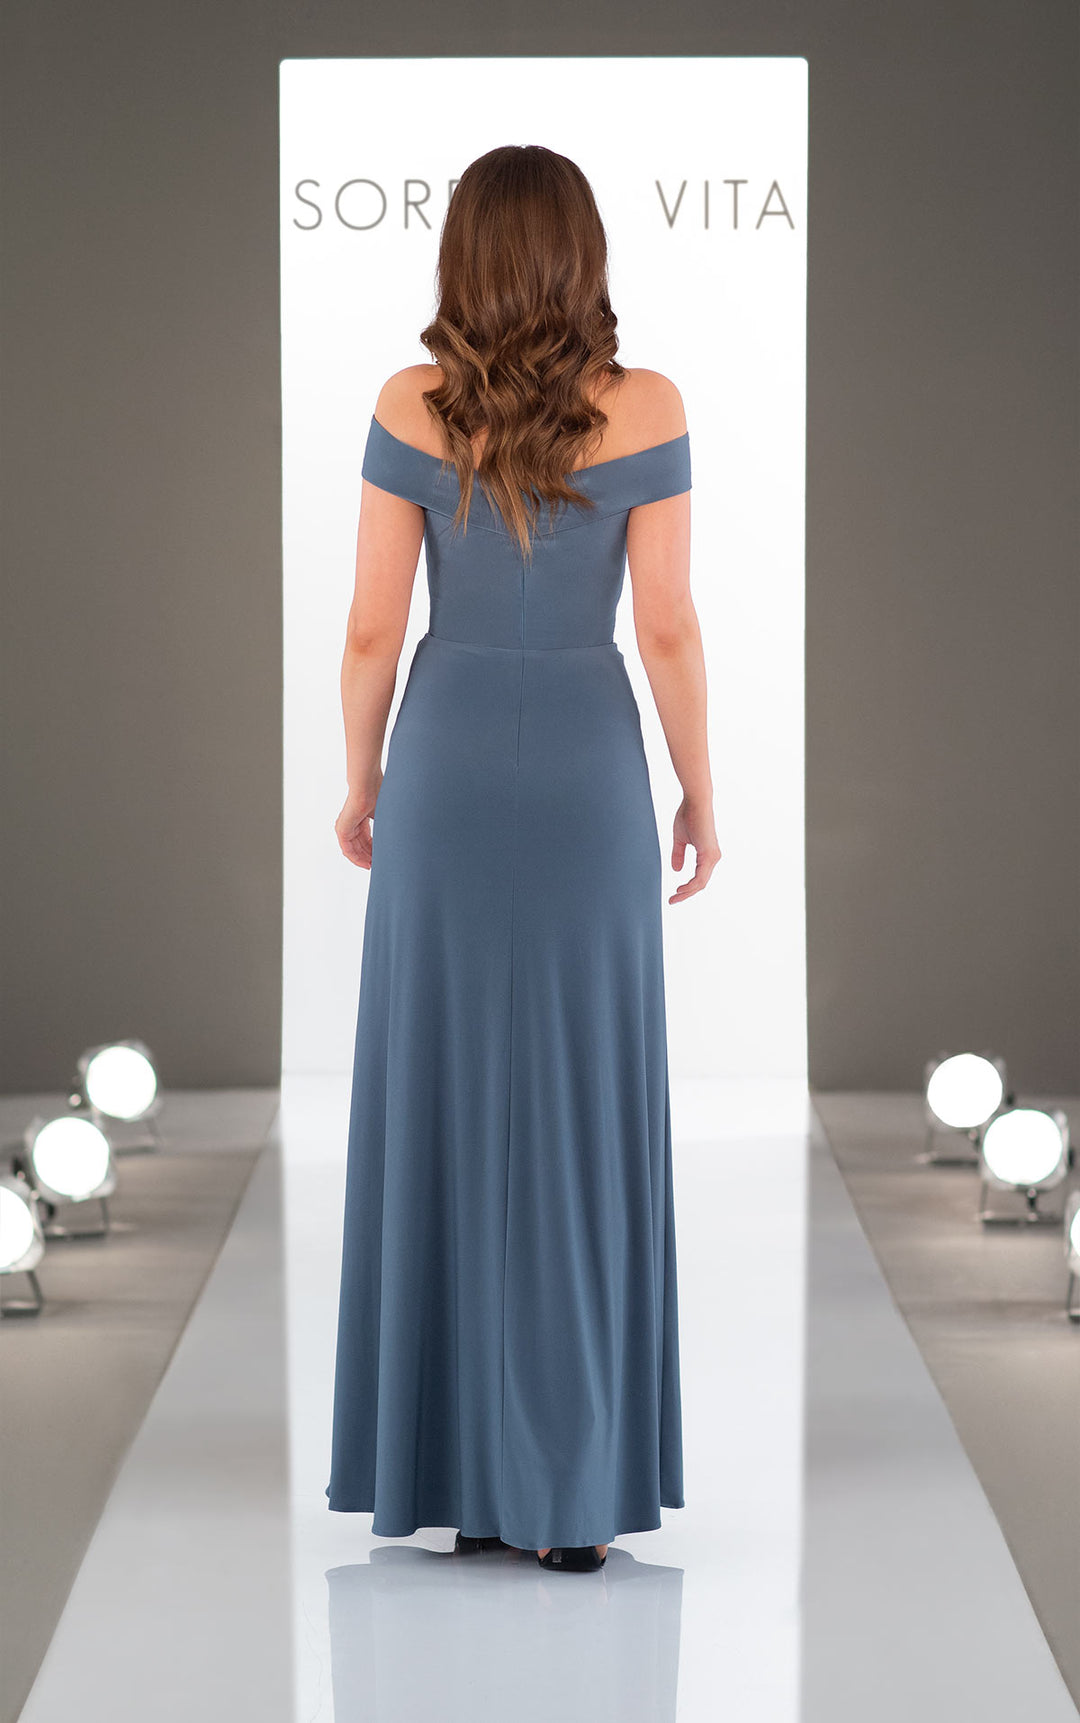 Sorella Vita Off Shoulder Dress Style 9134 Size 12